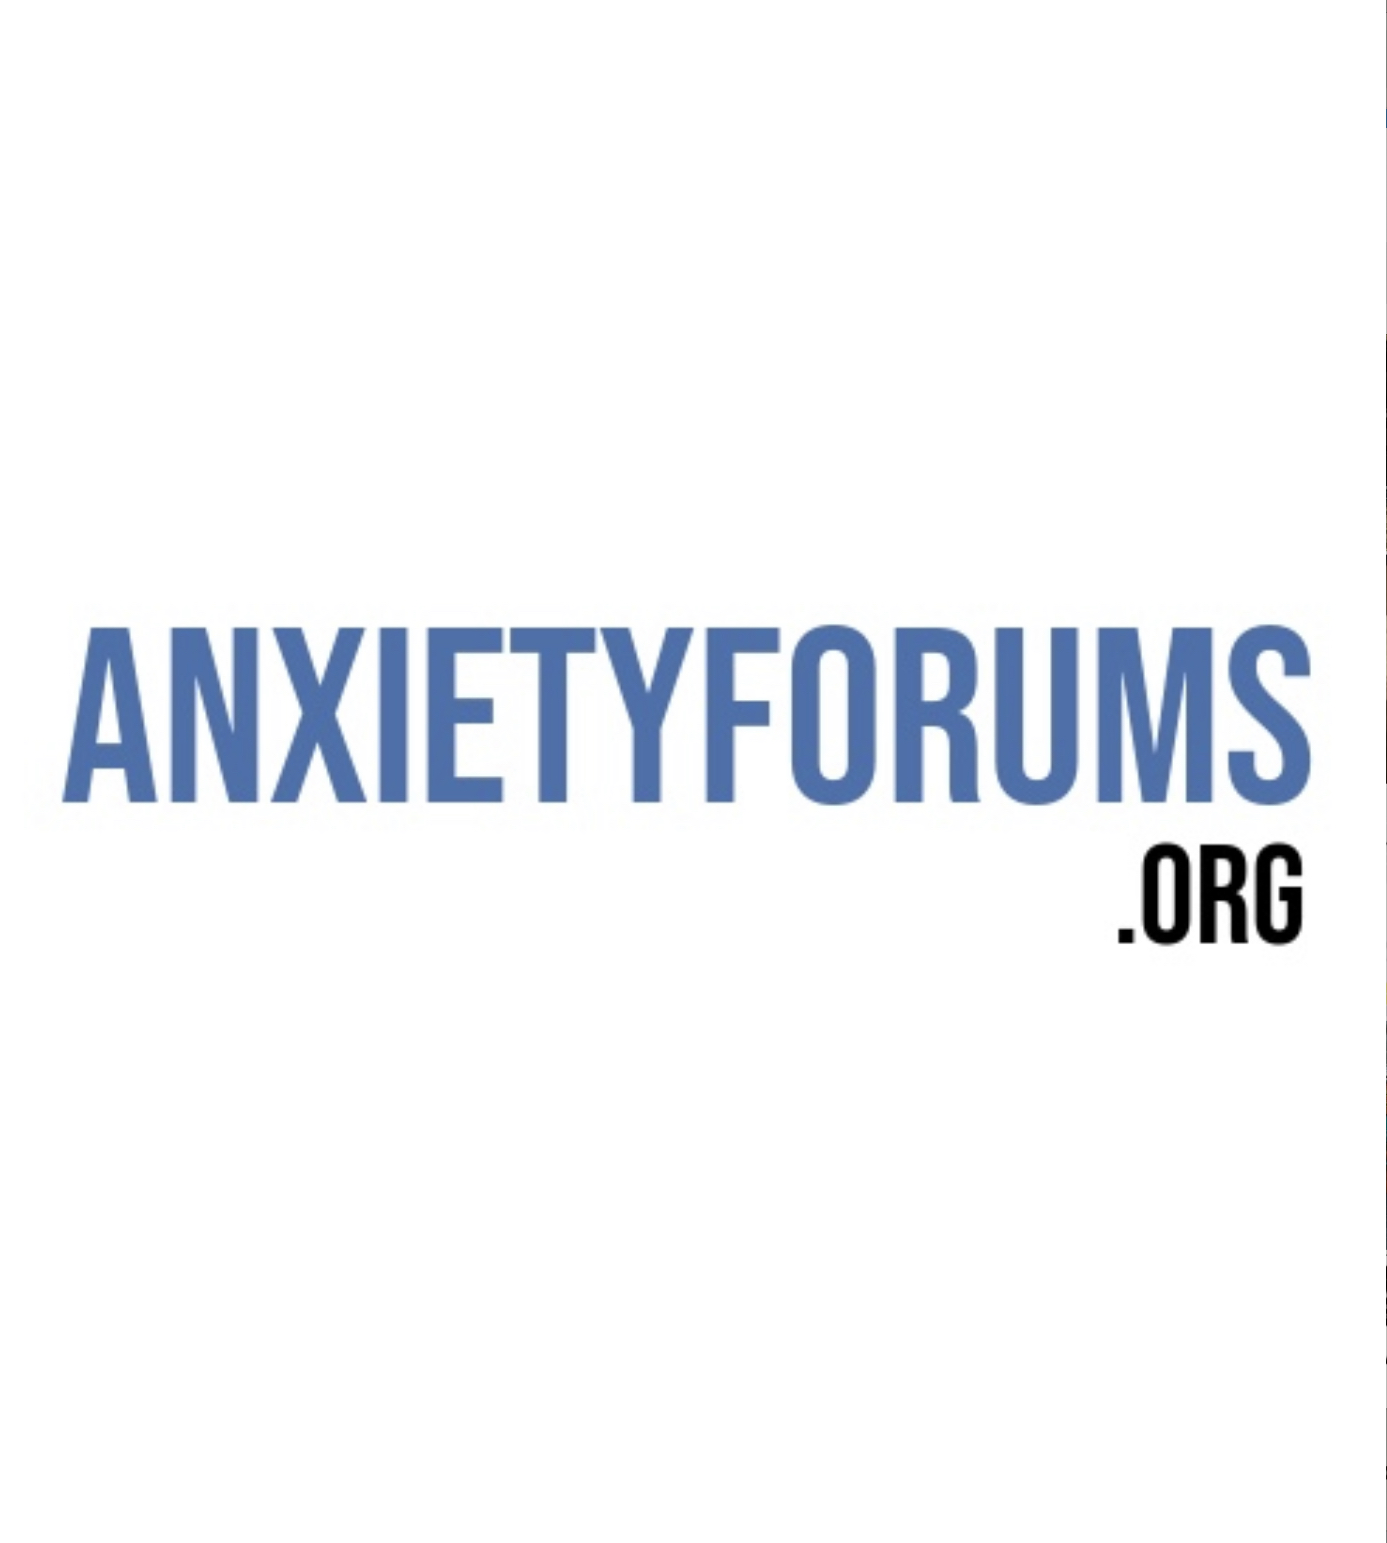 www.anxietyforums.org